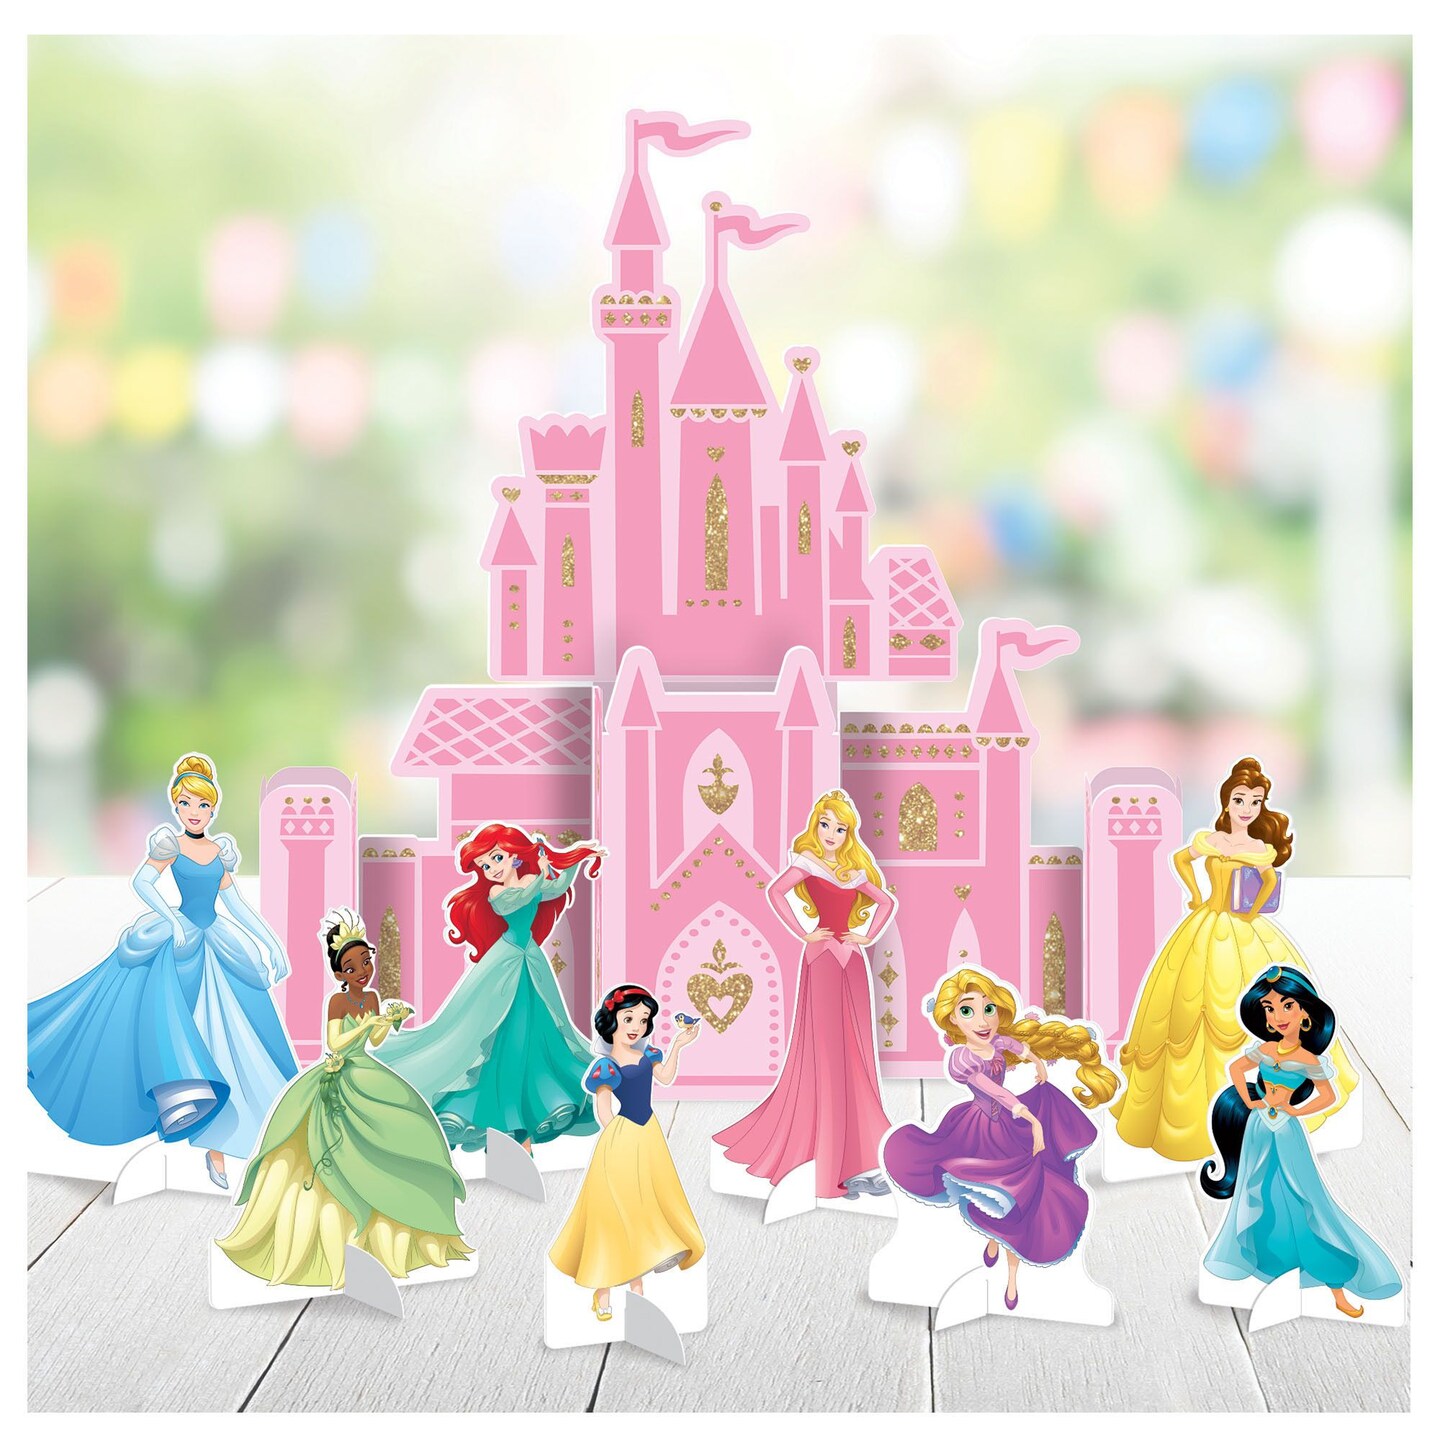 Disney Princess Once Upon a Time Table Decoration Kit